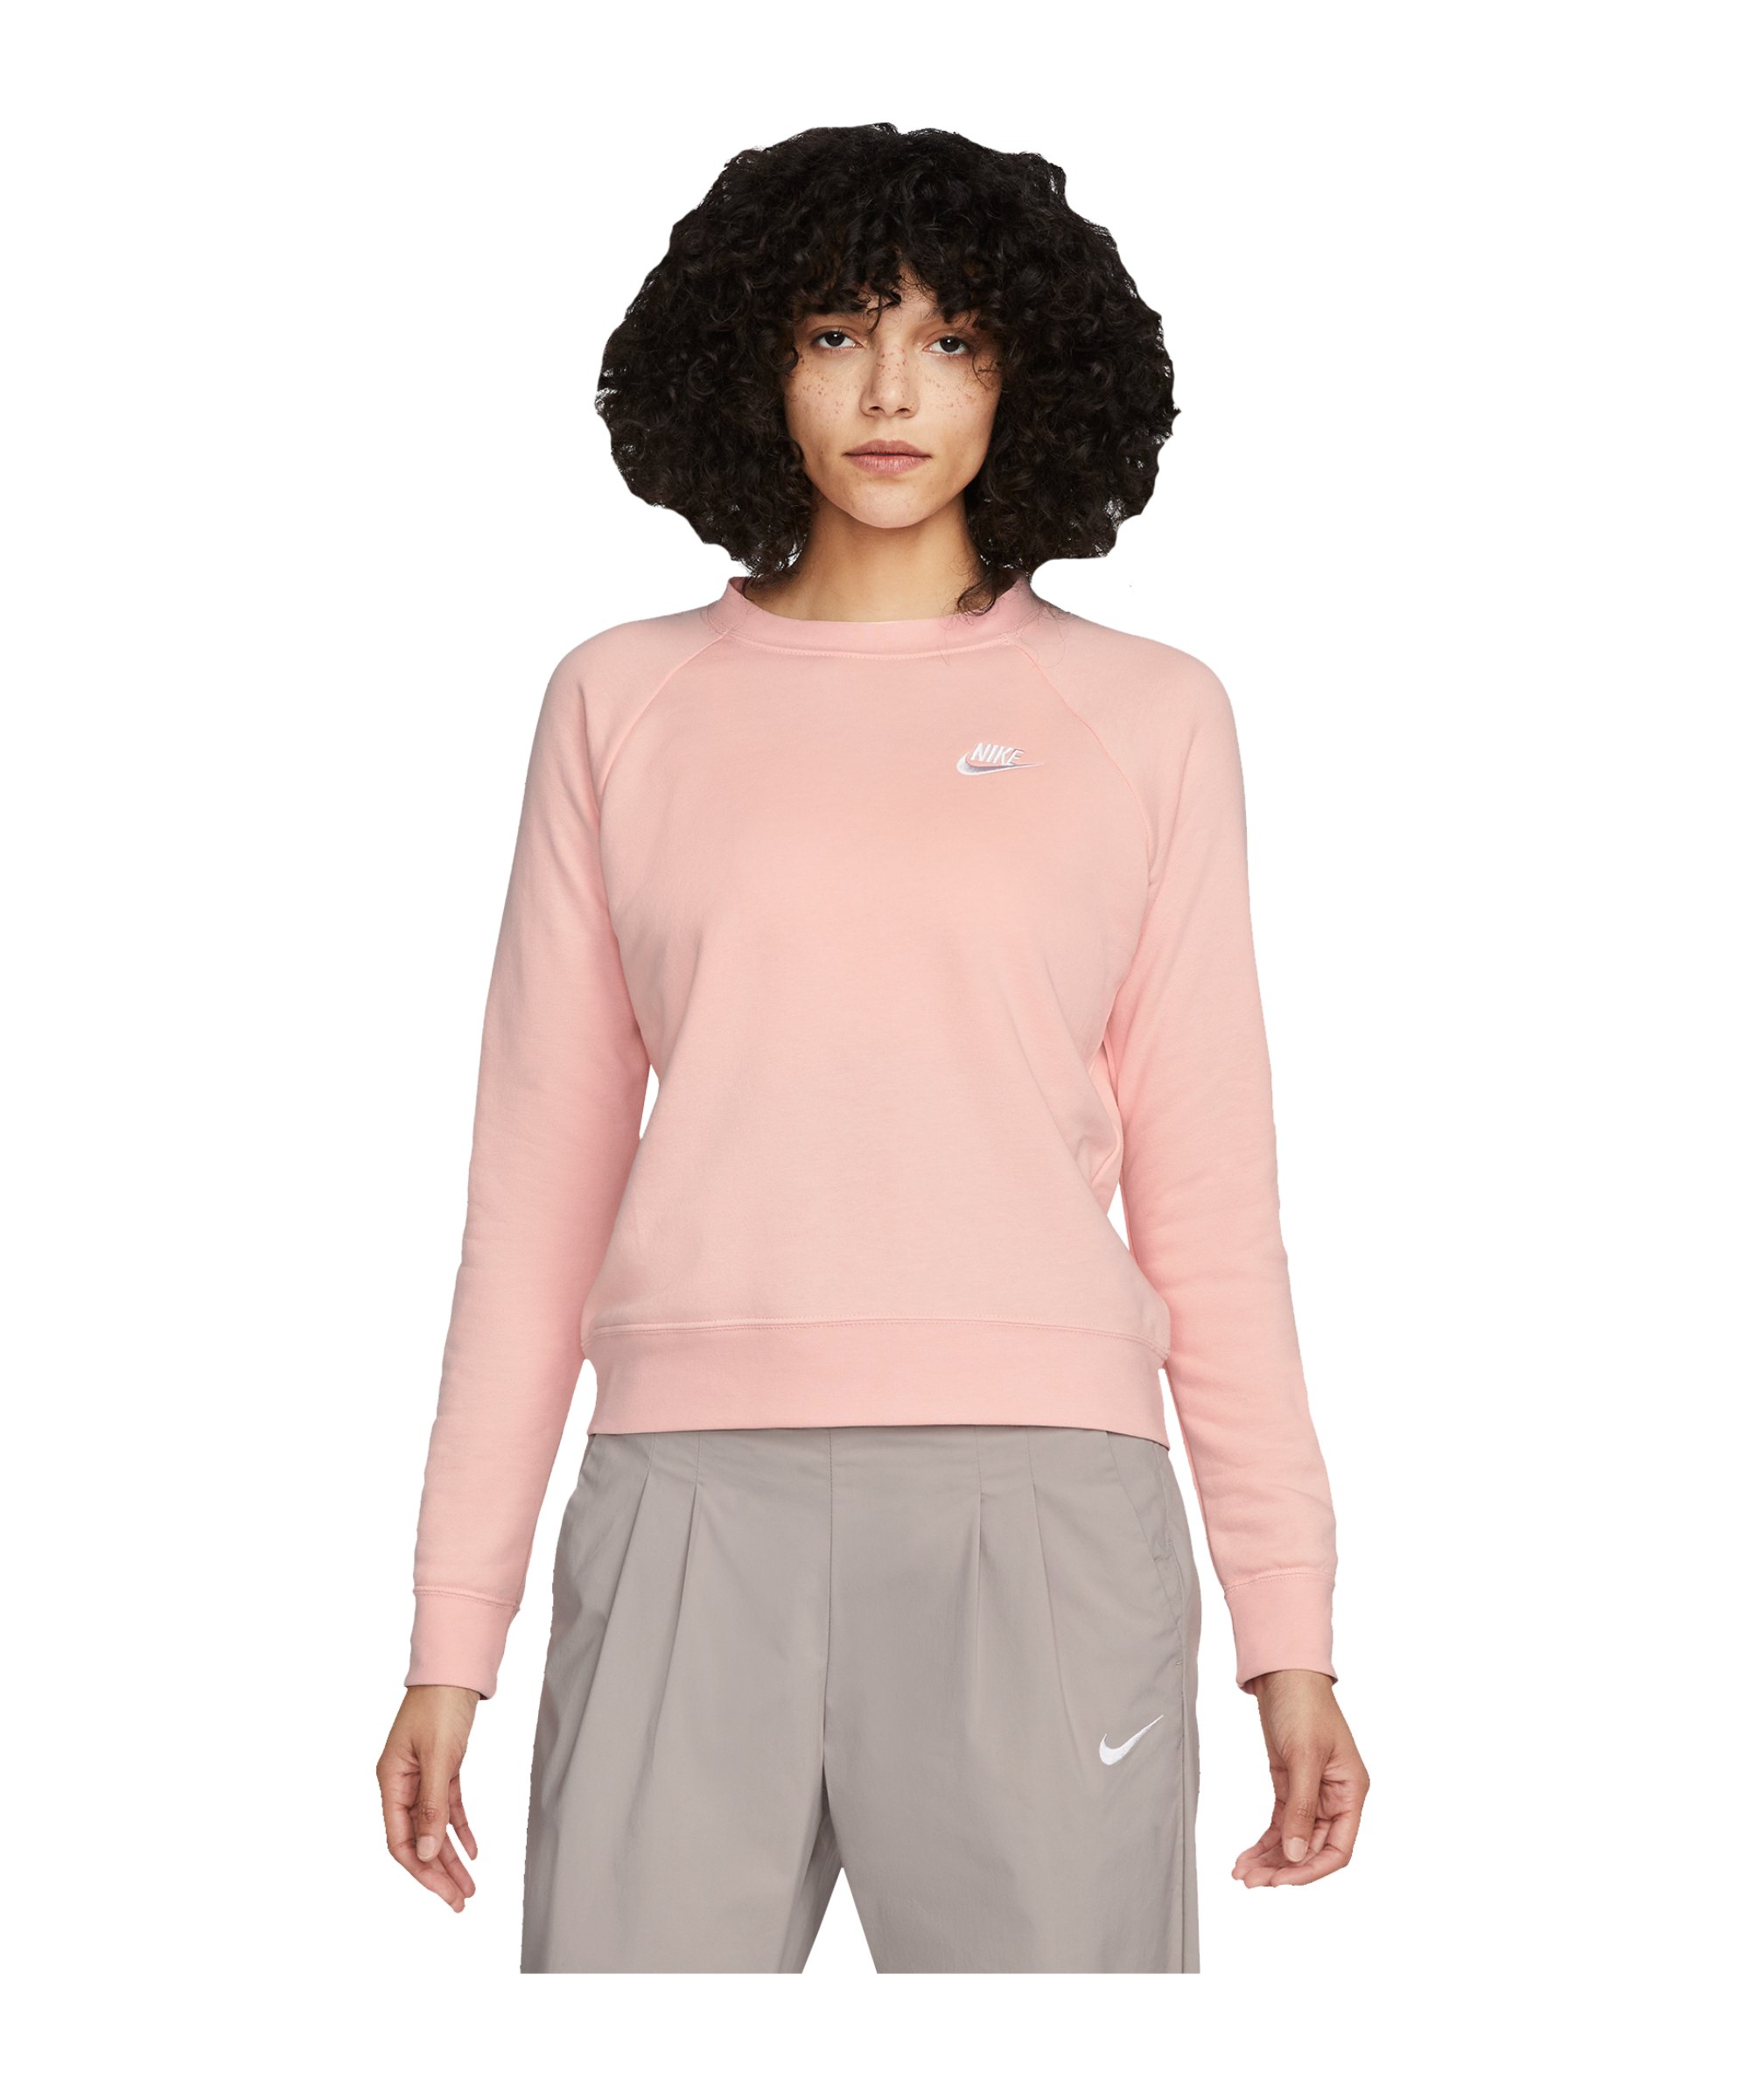 Nike Essential Fleece Sweatshirt Damen Rosa 611 - rosa